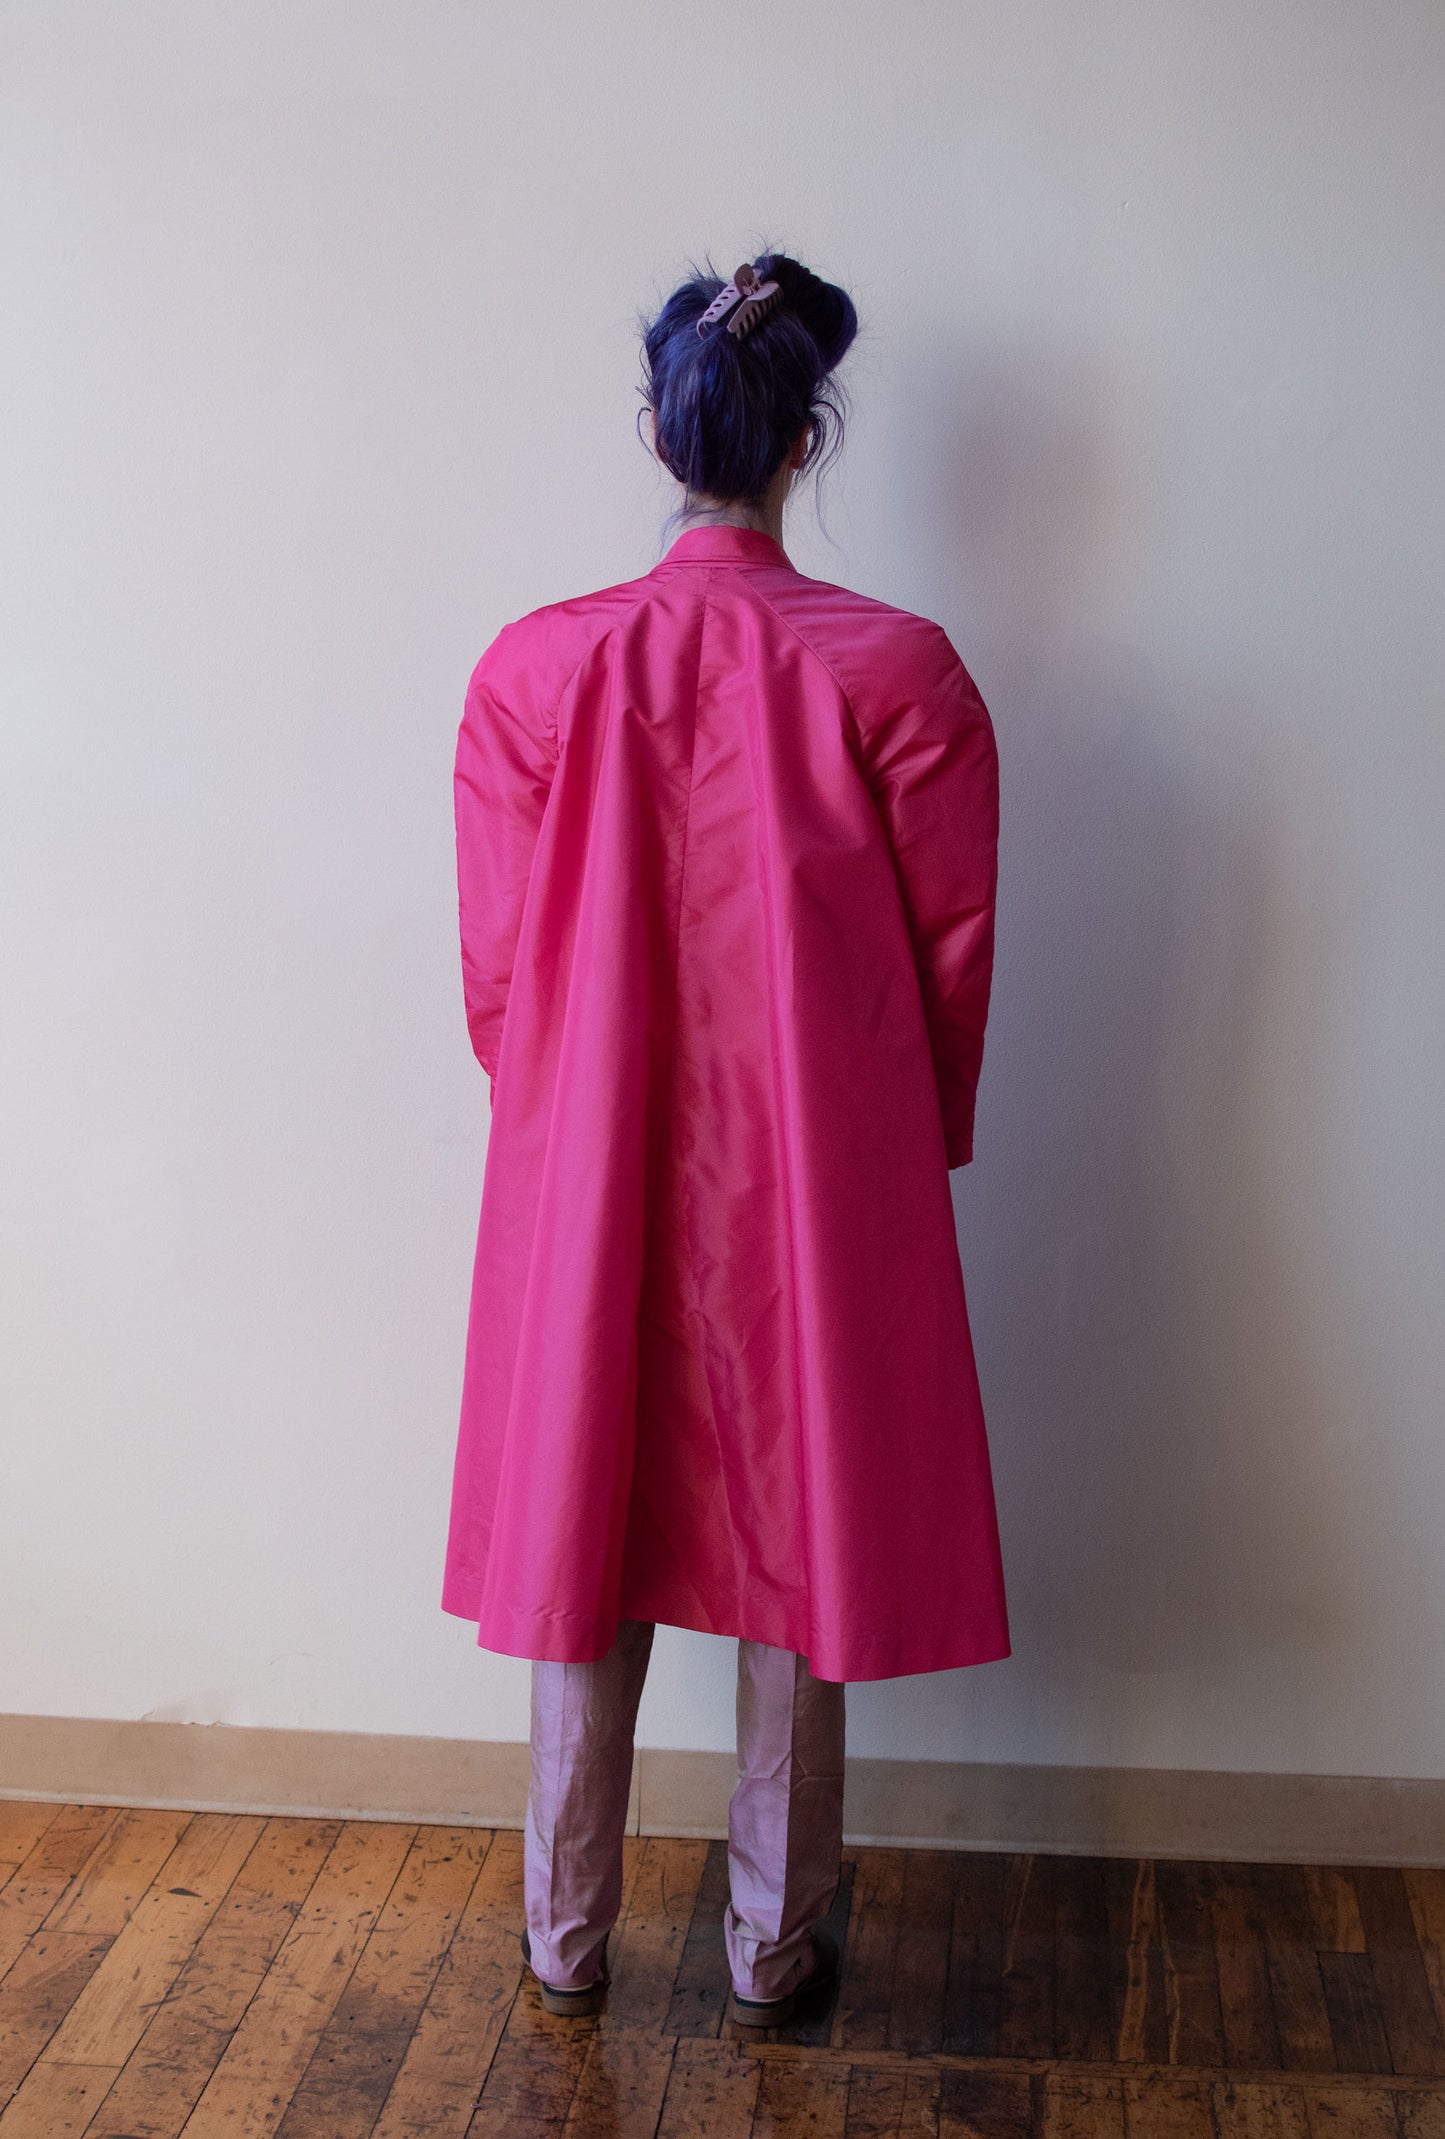 1980s Pink Taffeta Coat | Victor Costa